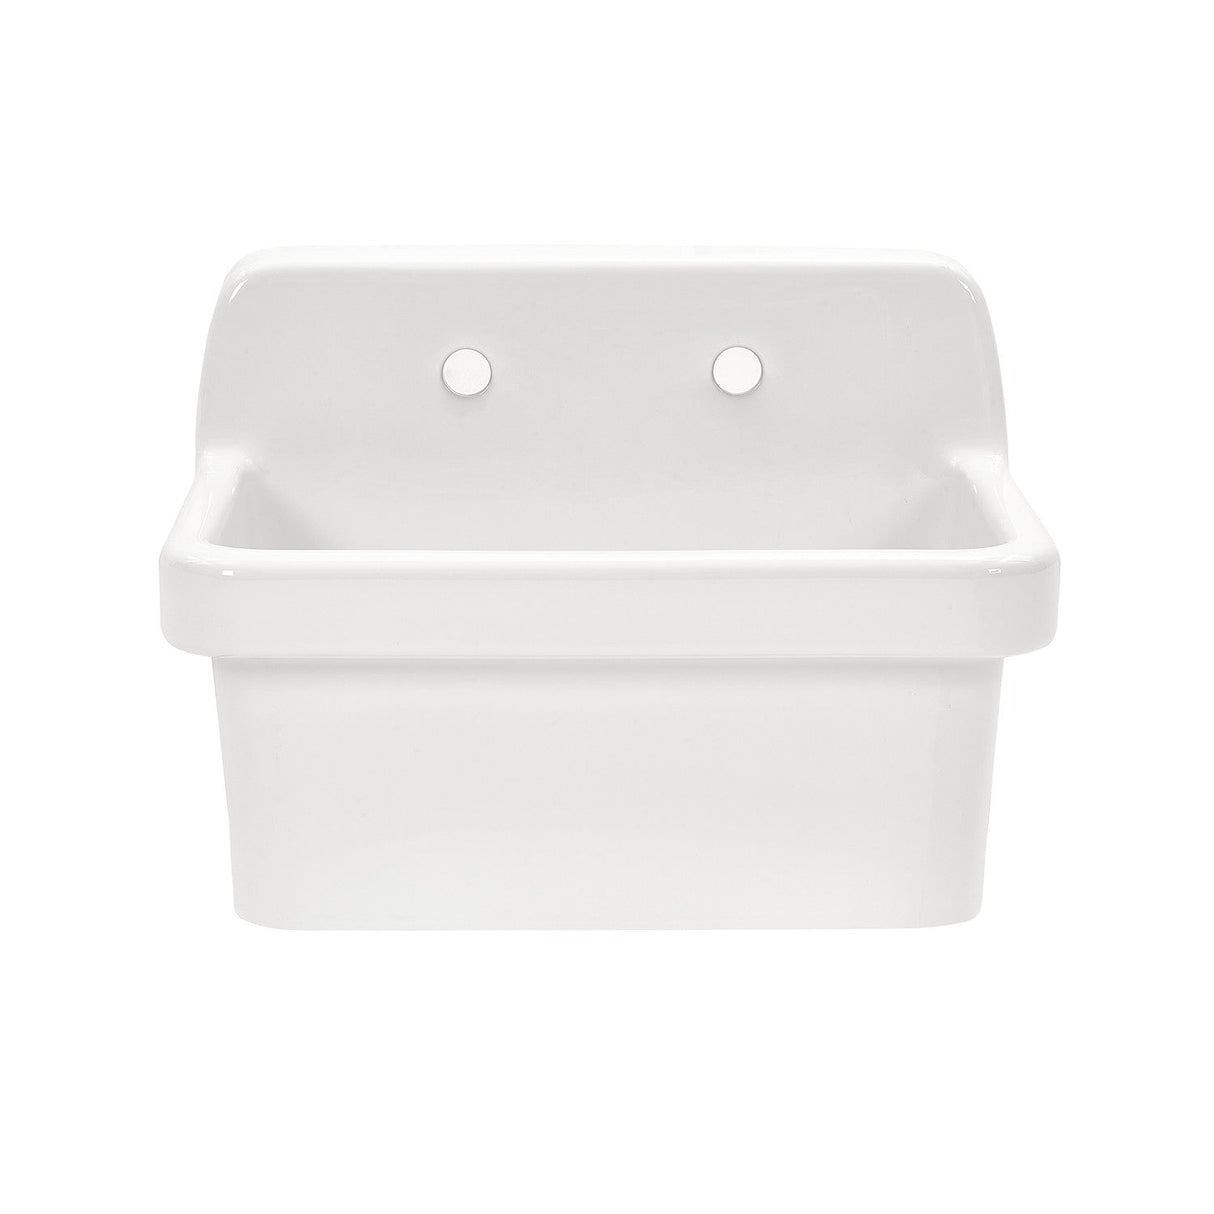 Doriteal GPKWS241917 24-Inch Ceramic Wall Mount Utility Sink, Glossy White